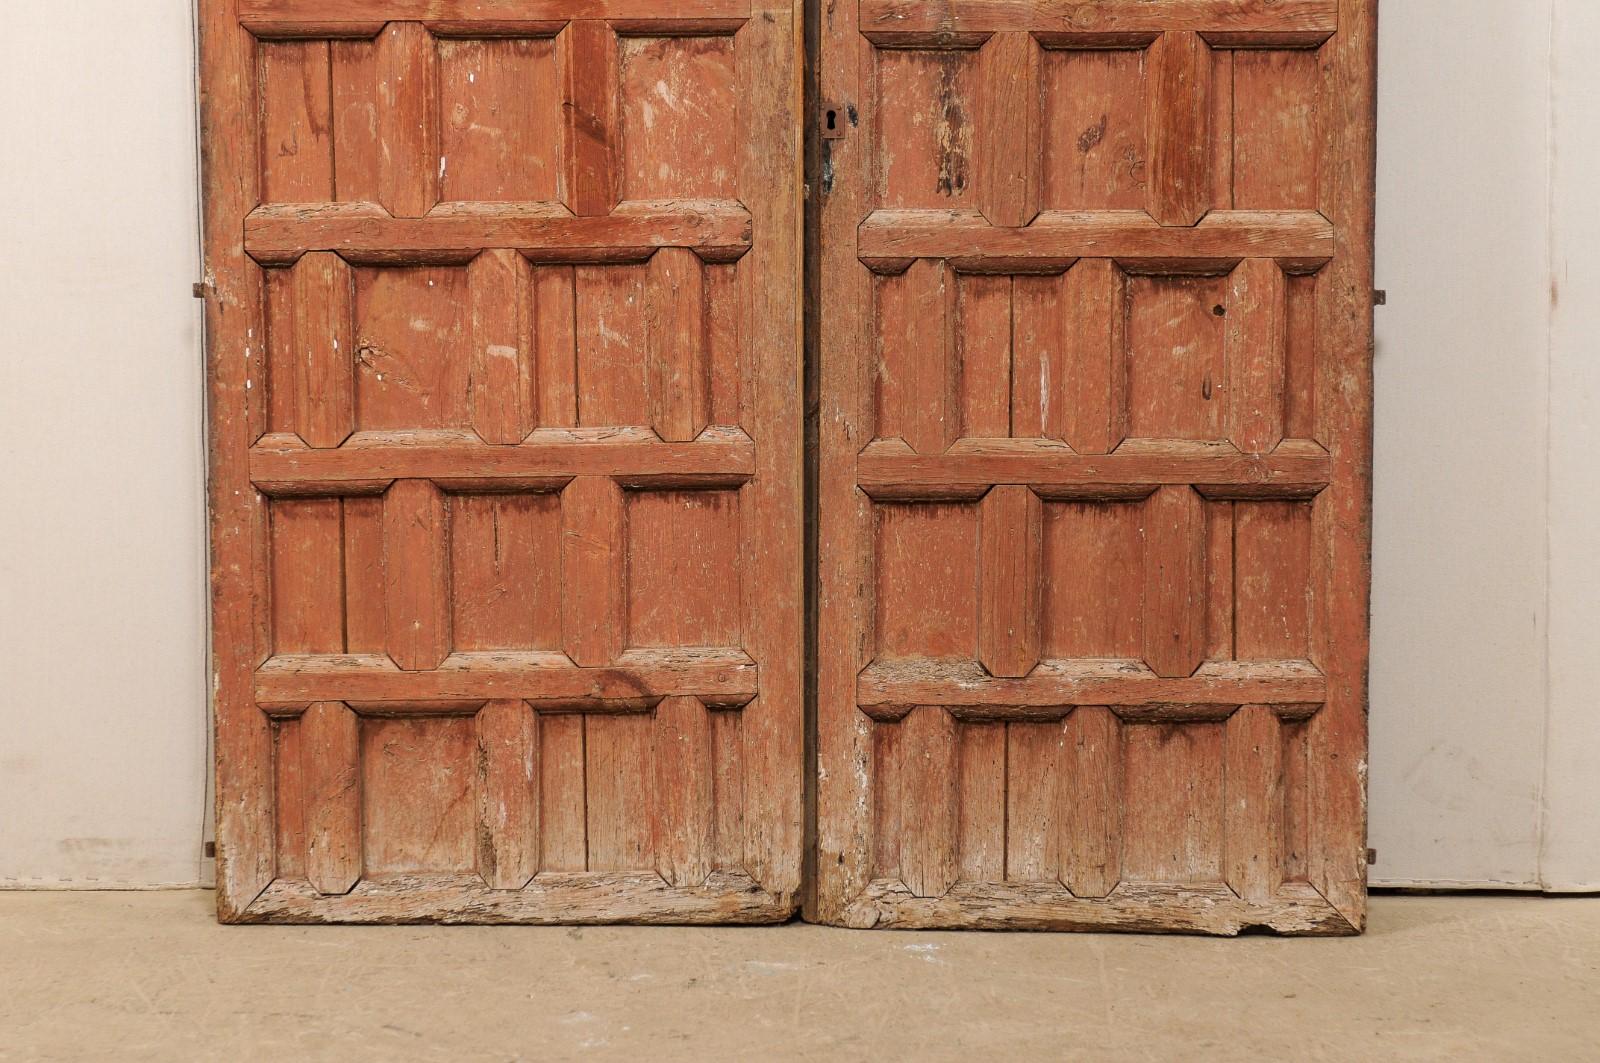 Wood Spanish Pair of Paneled Doors with Original Hardware, Turn 18th-19th Century